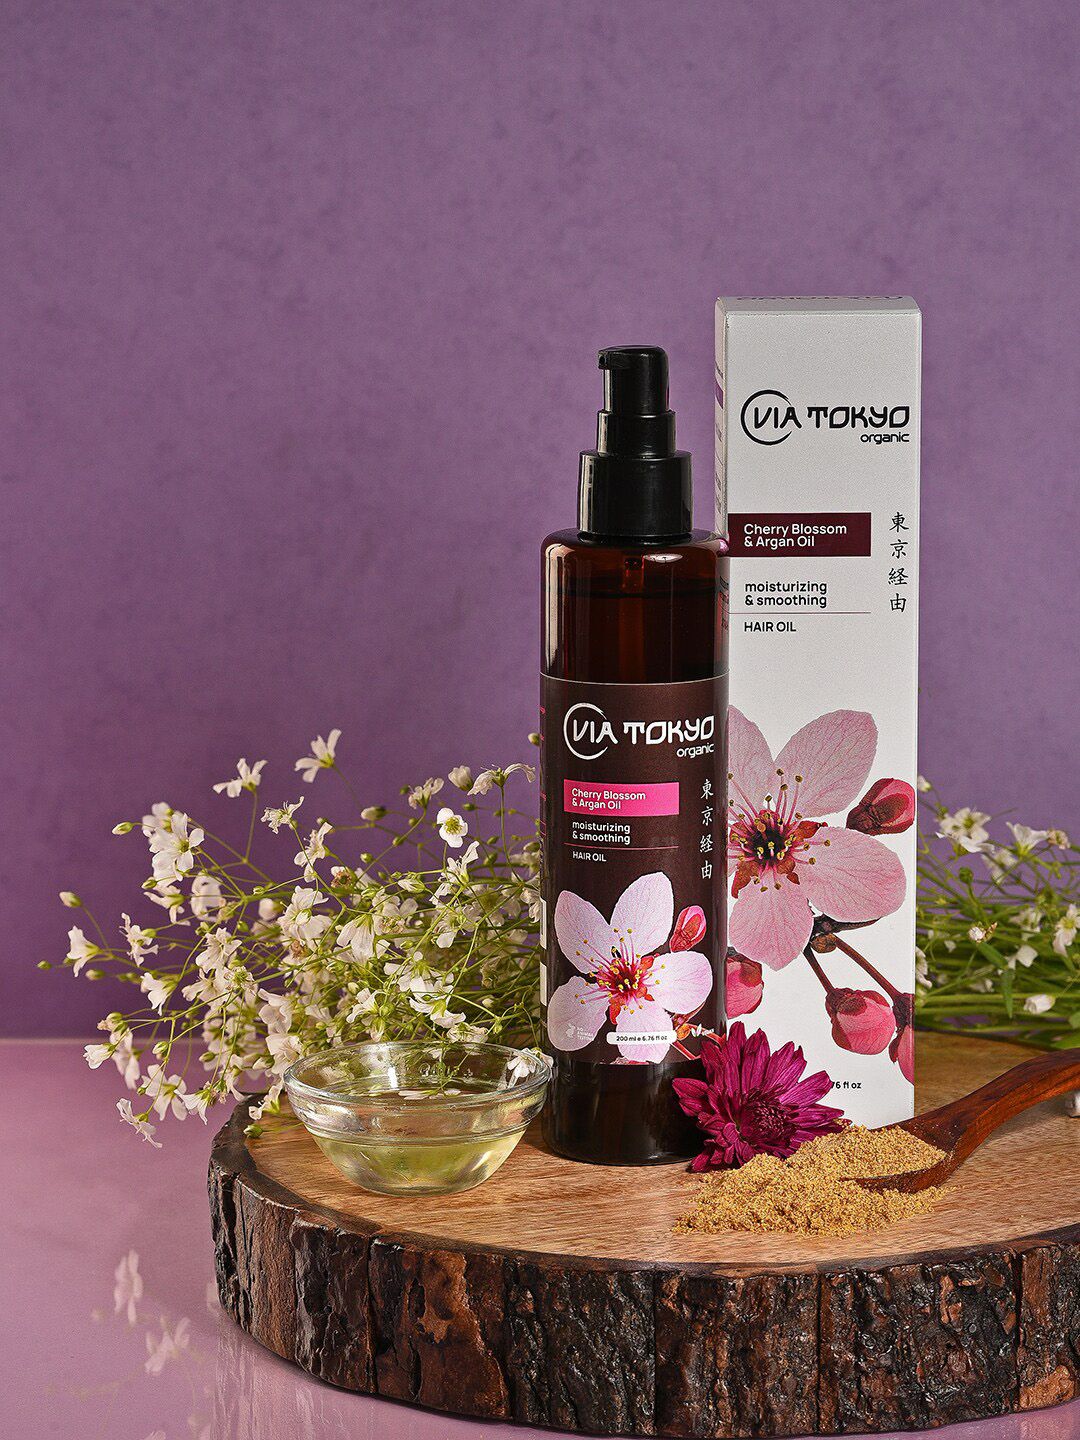 VIA TOKYO ORGANIC Cherry Blossom & Argan Oil Moisturizing Hair Oil - 200 ml Price in India